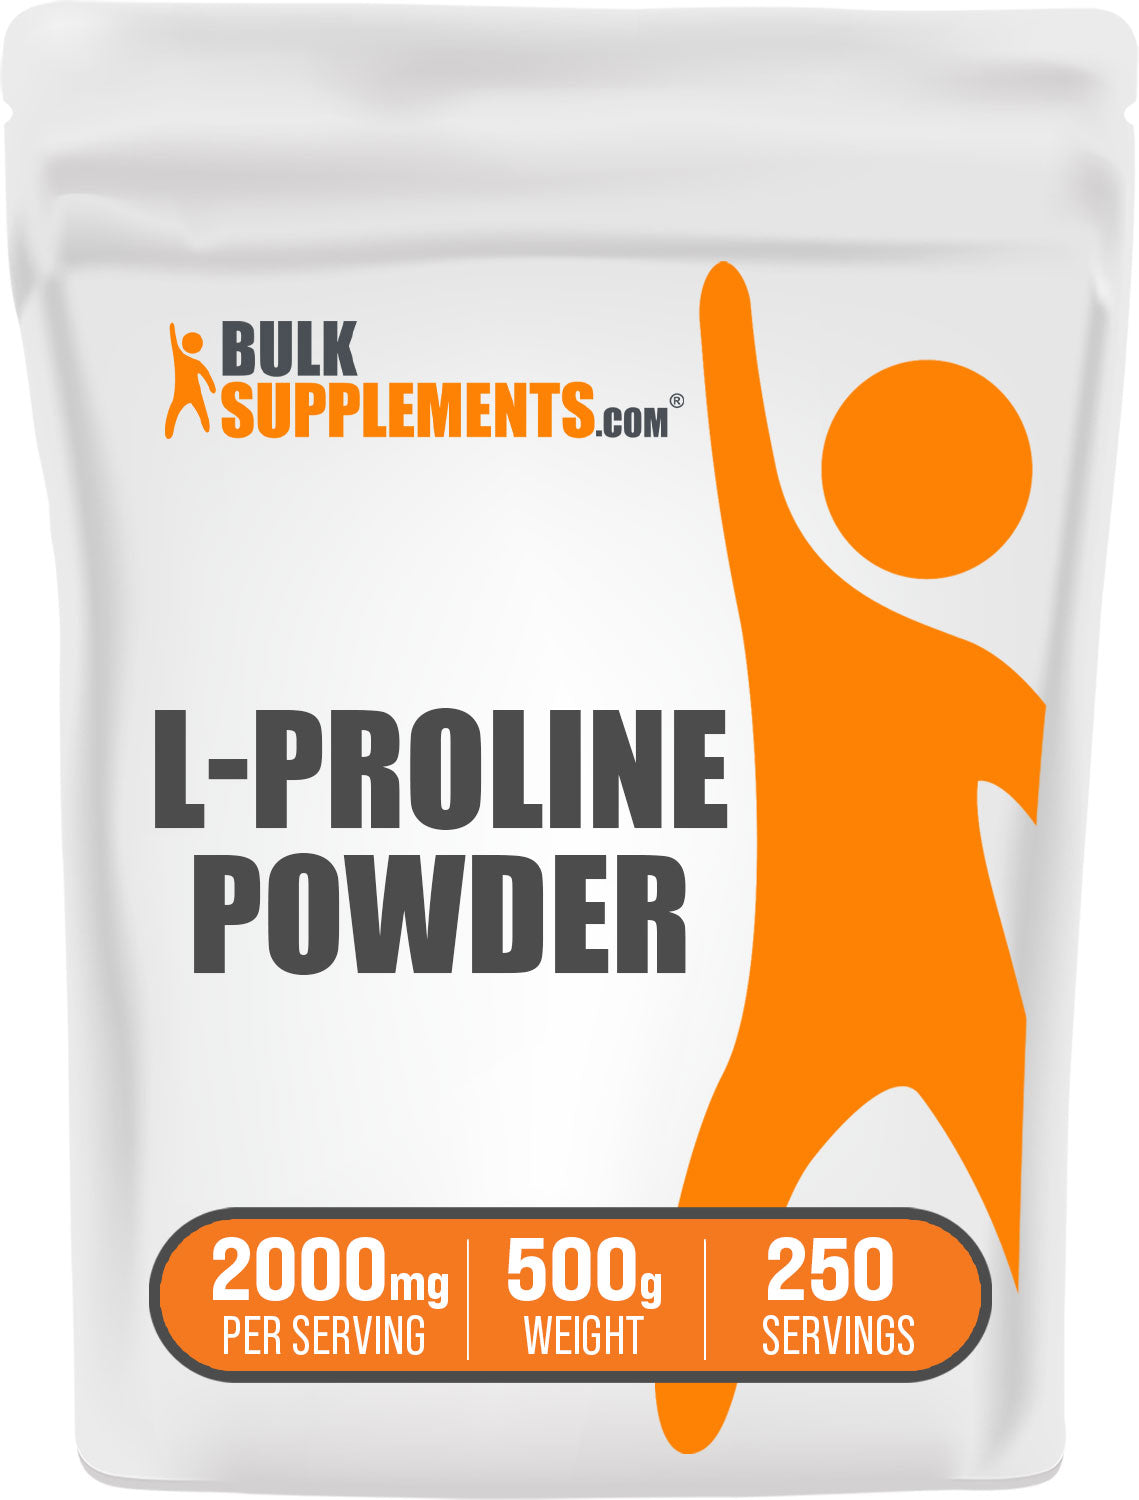 L-Proline Powder 500g